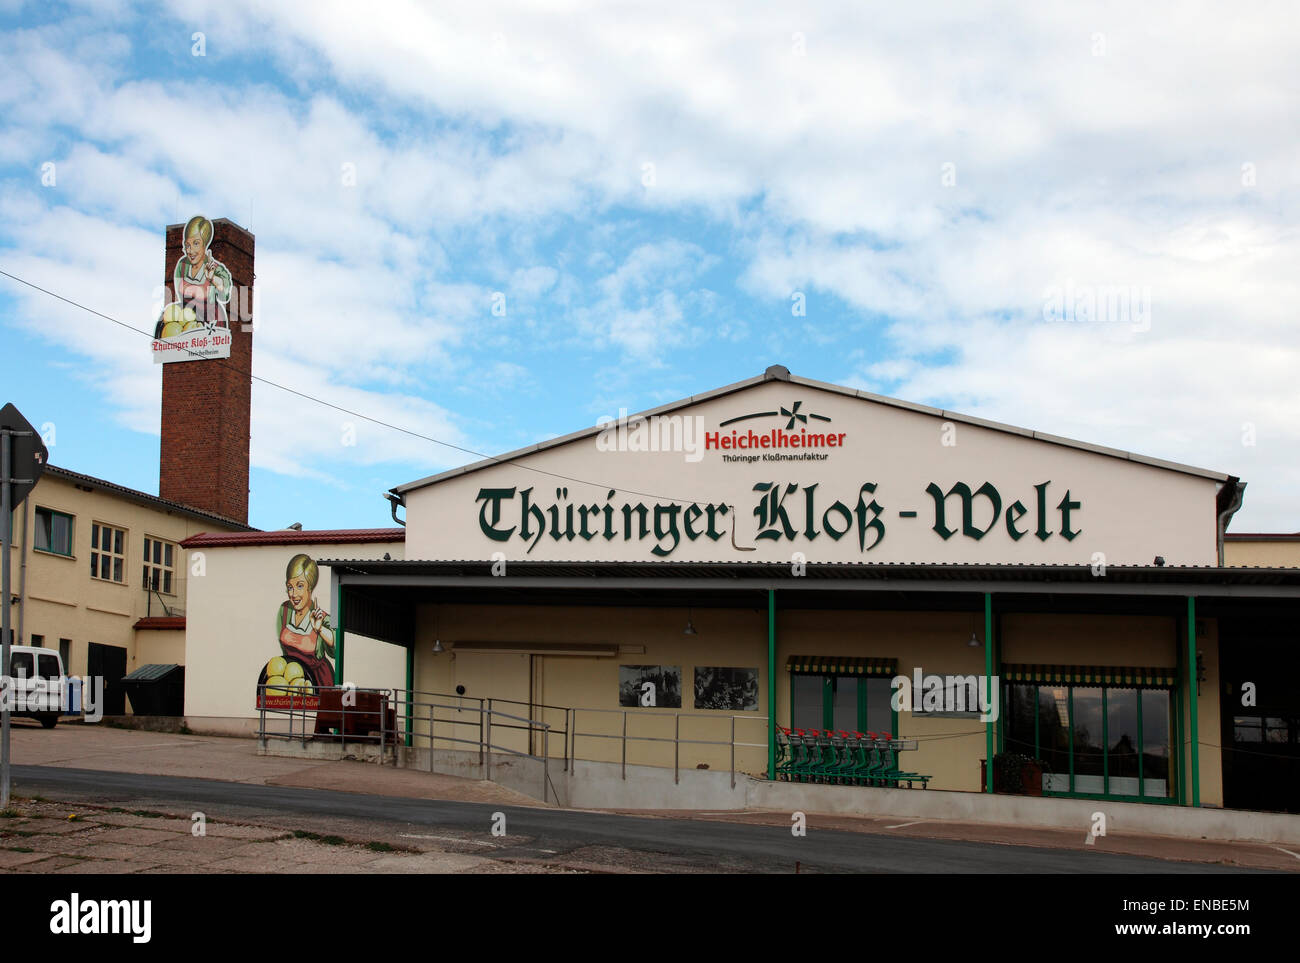 El Thuringer Dumpling Museo en Heichelheimer. Foto de stock